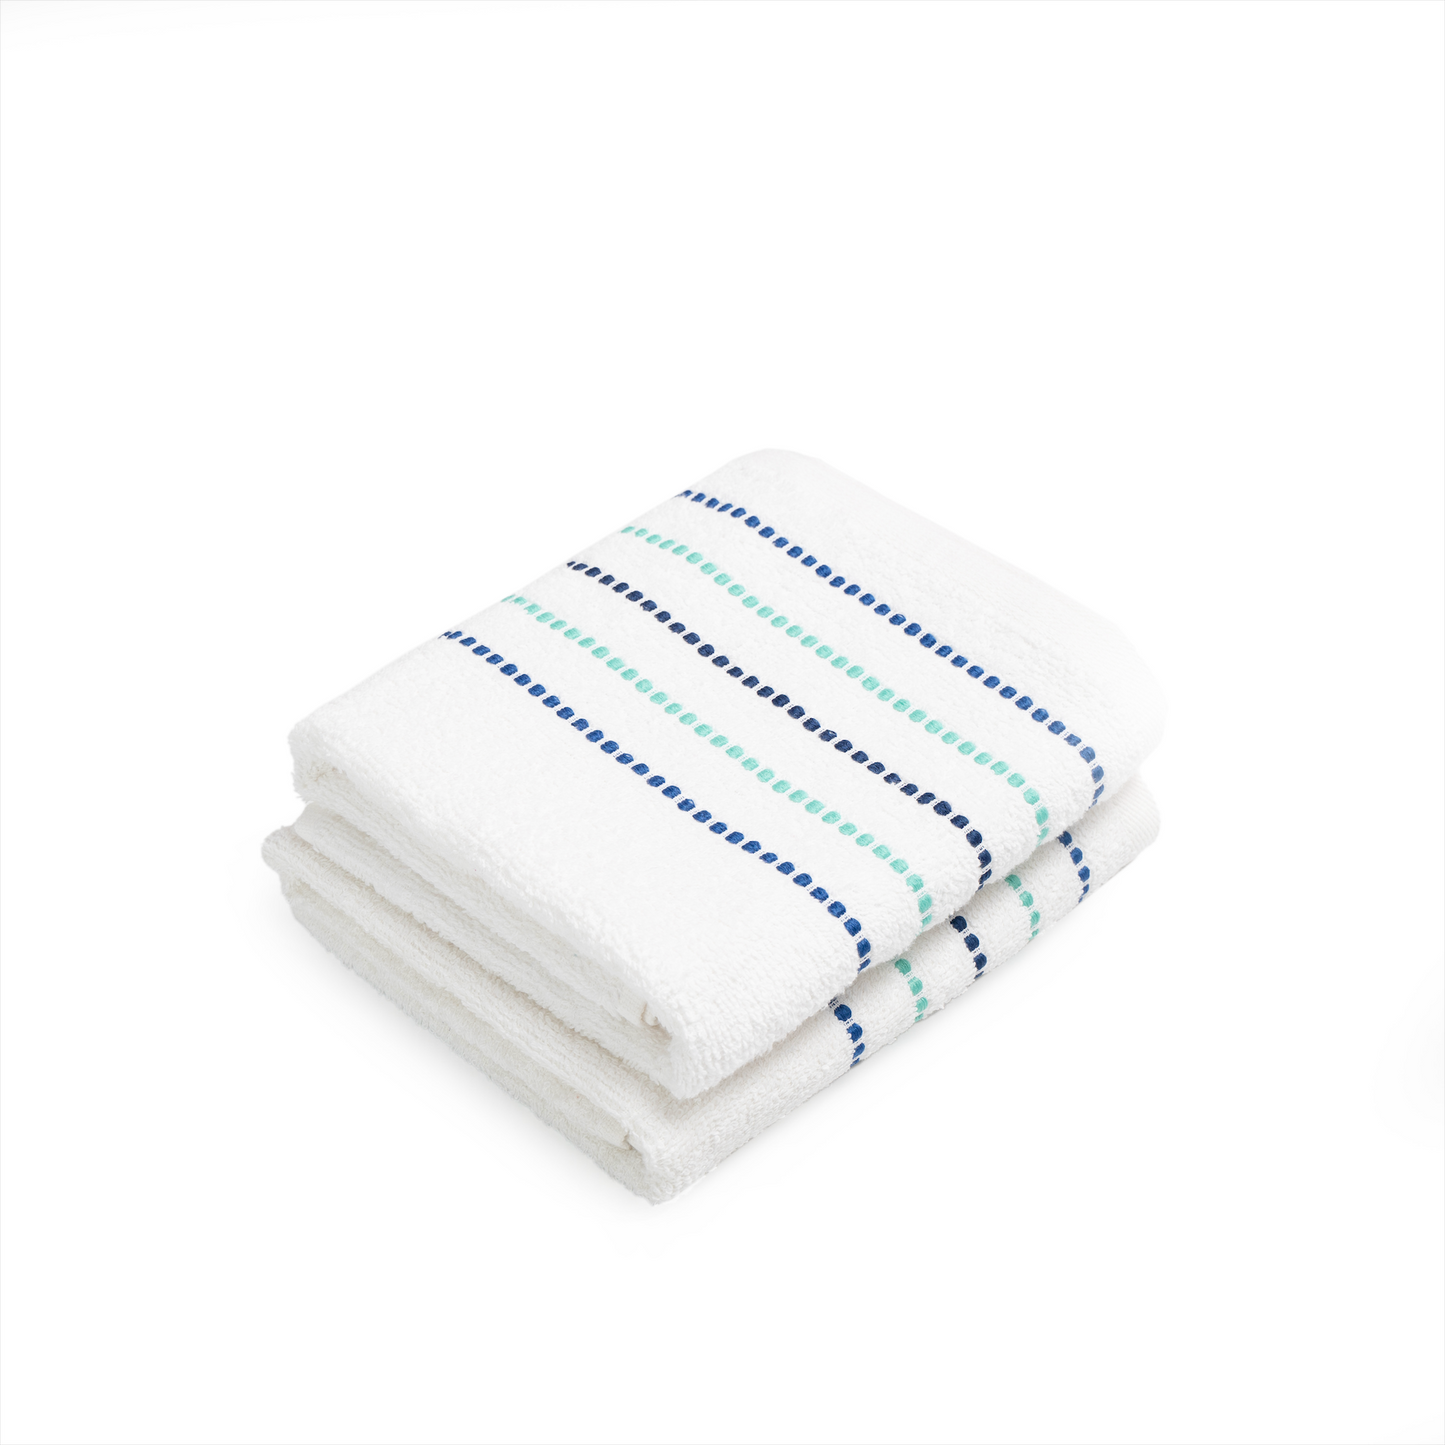 White Stripe Hand Towel